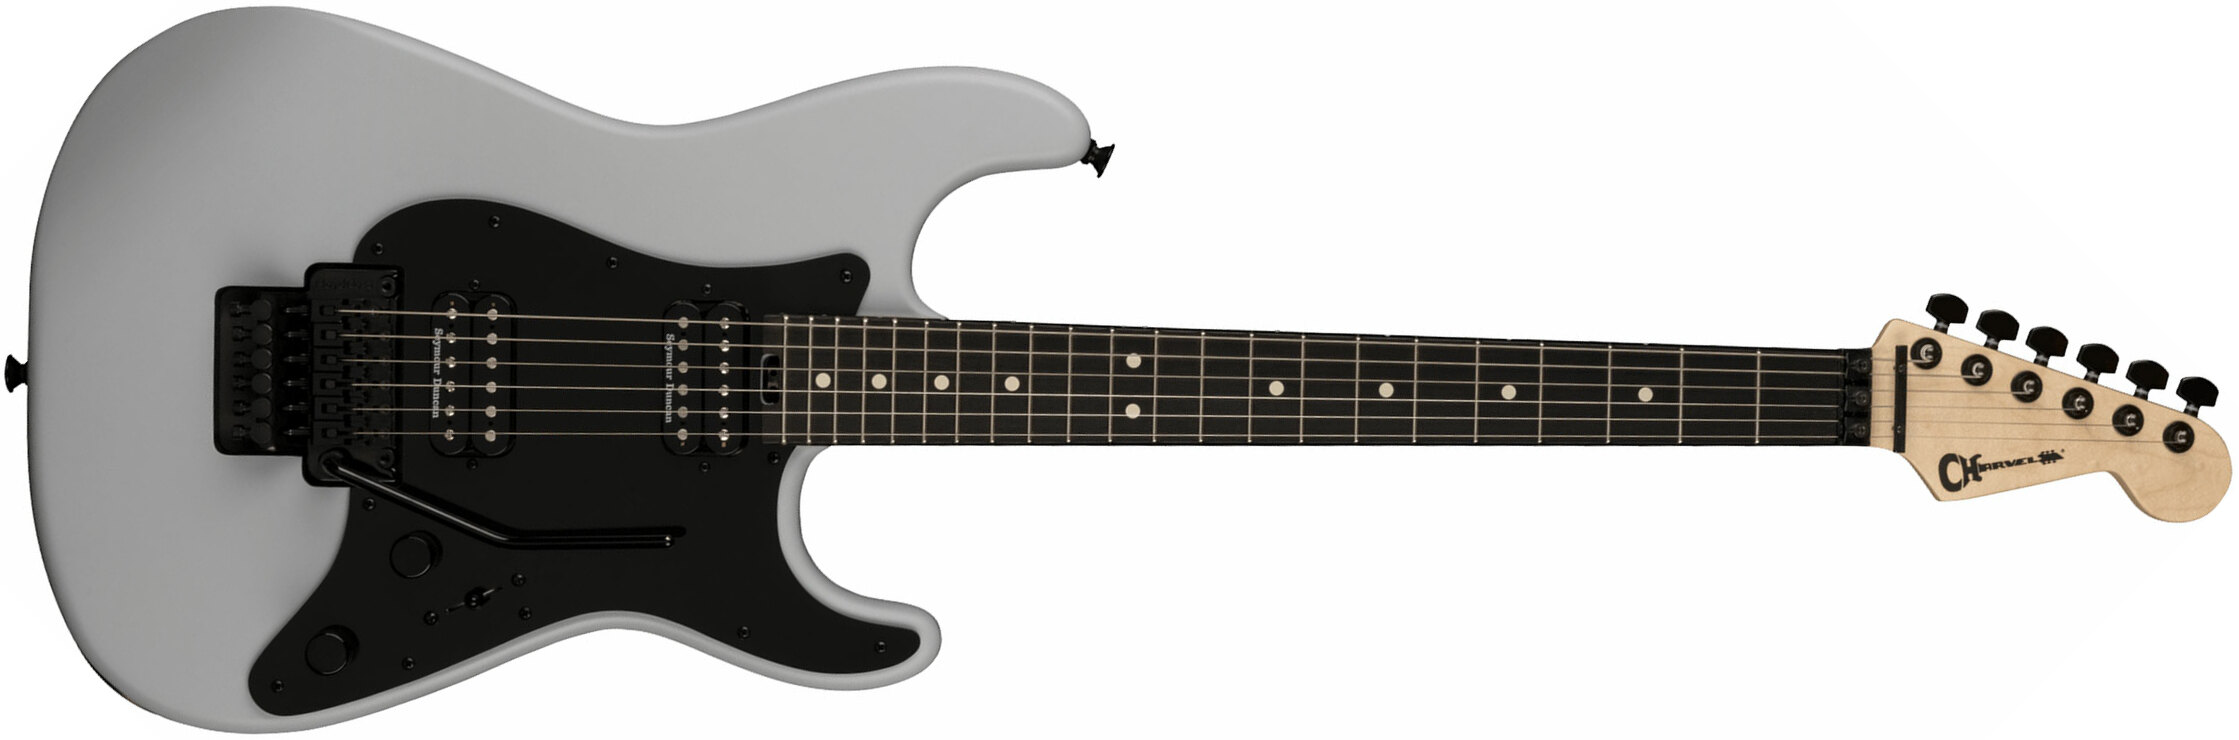 Charvel So-cal Style 1 Hh Fr E Pro-mod 2h Seymour Duncan Eb - Satin Primer Gray - E-Gitarre in Str-Form - Main picture